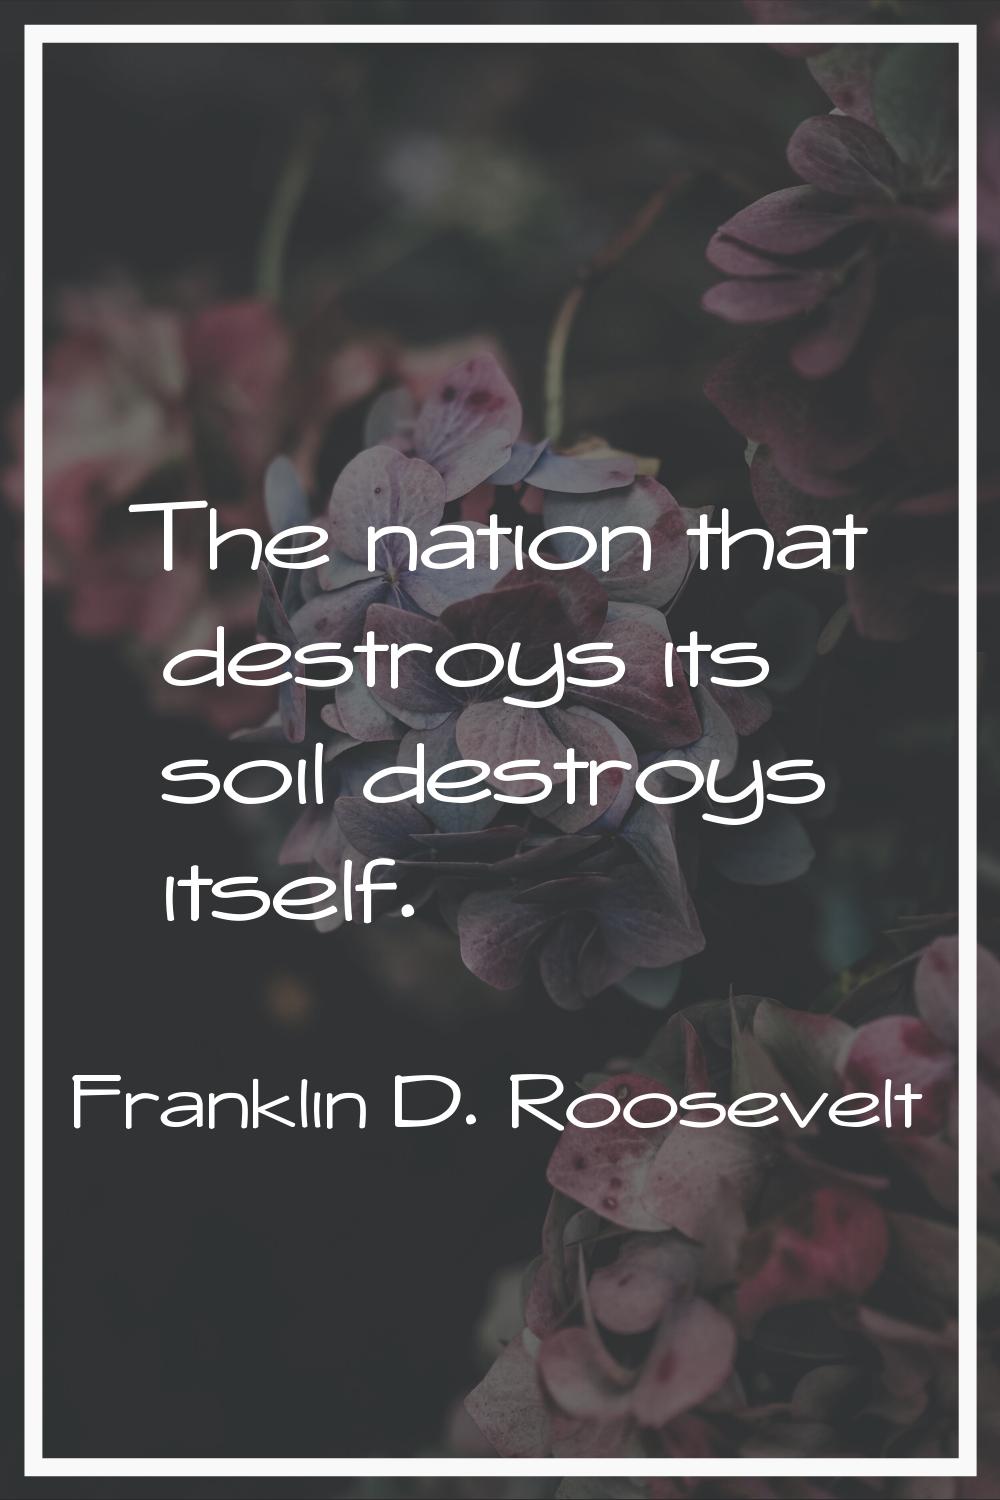 The nation that destroys its soil destroys itself.